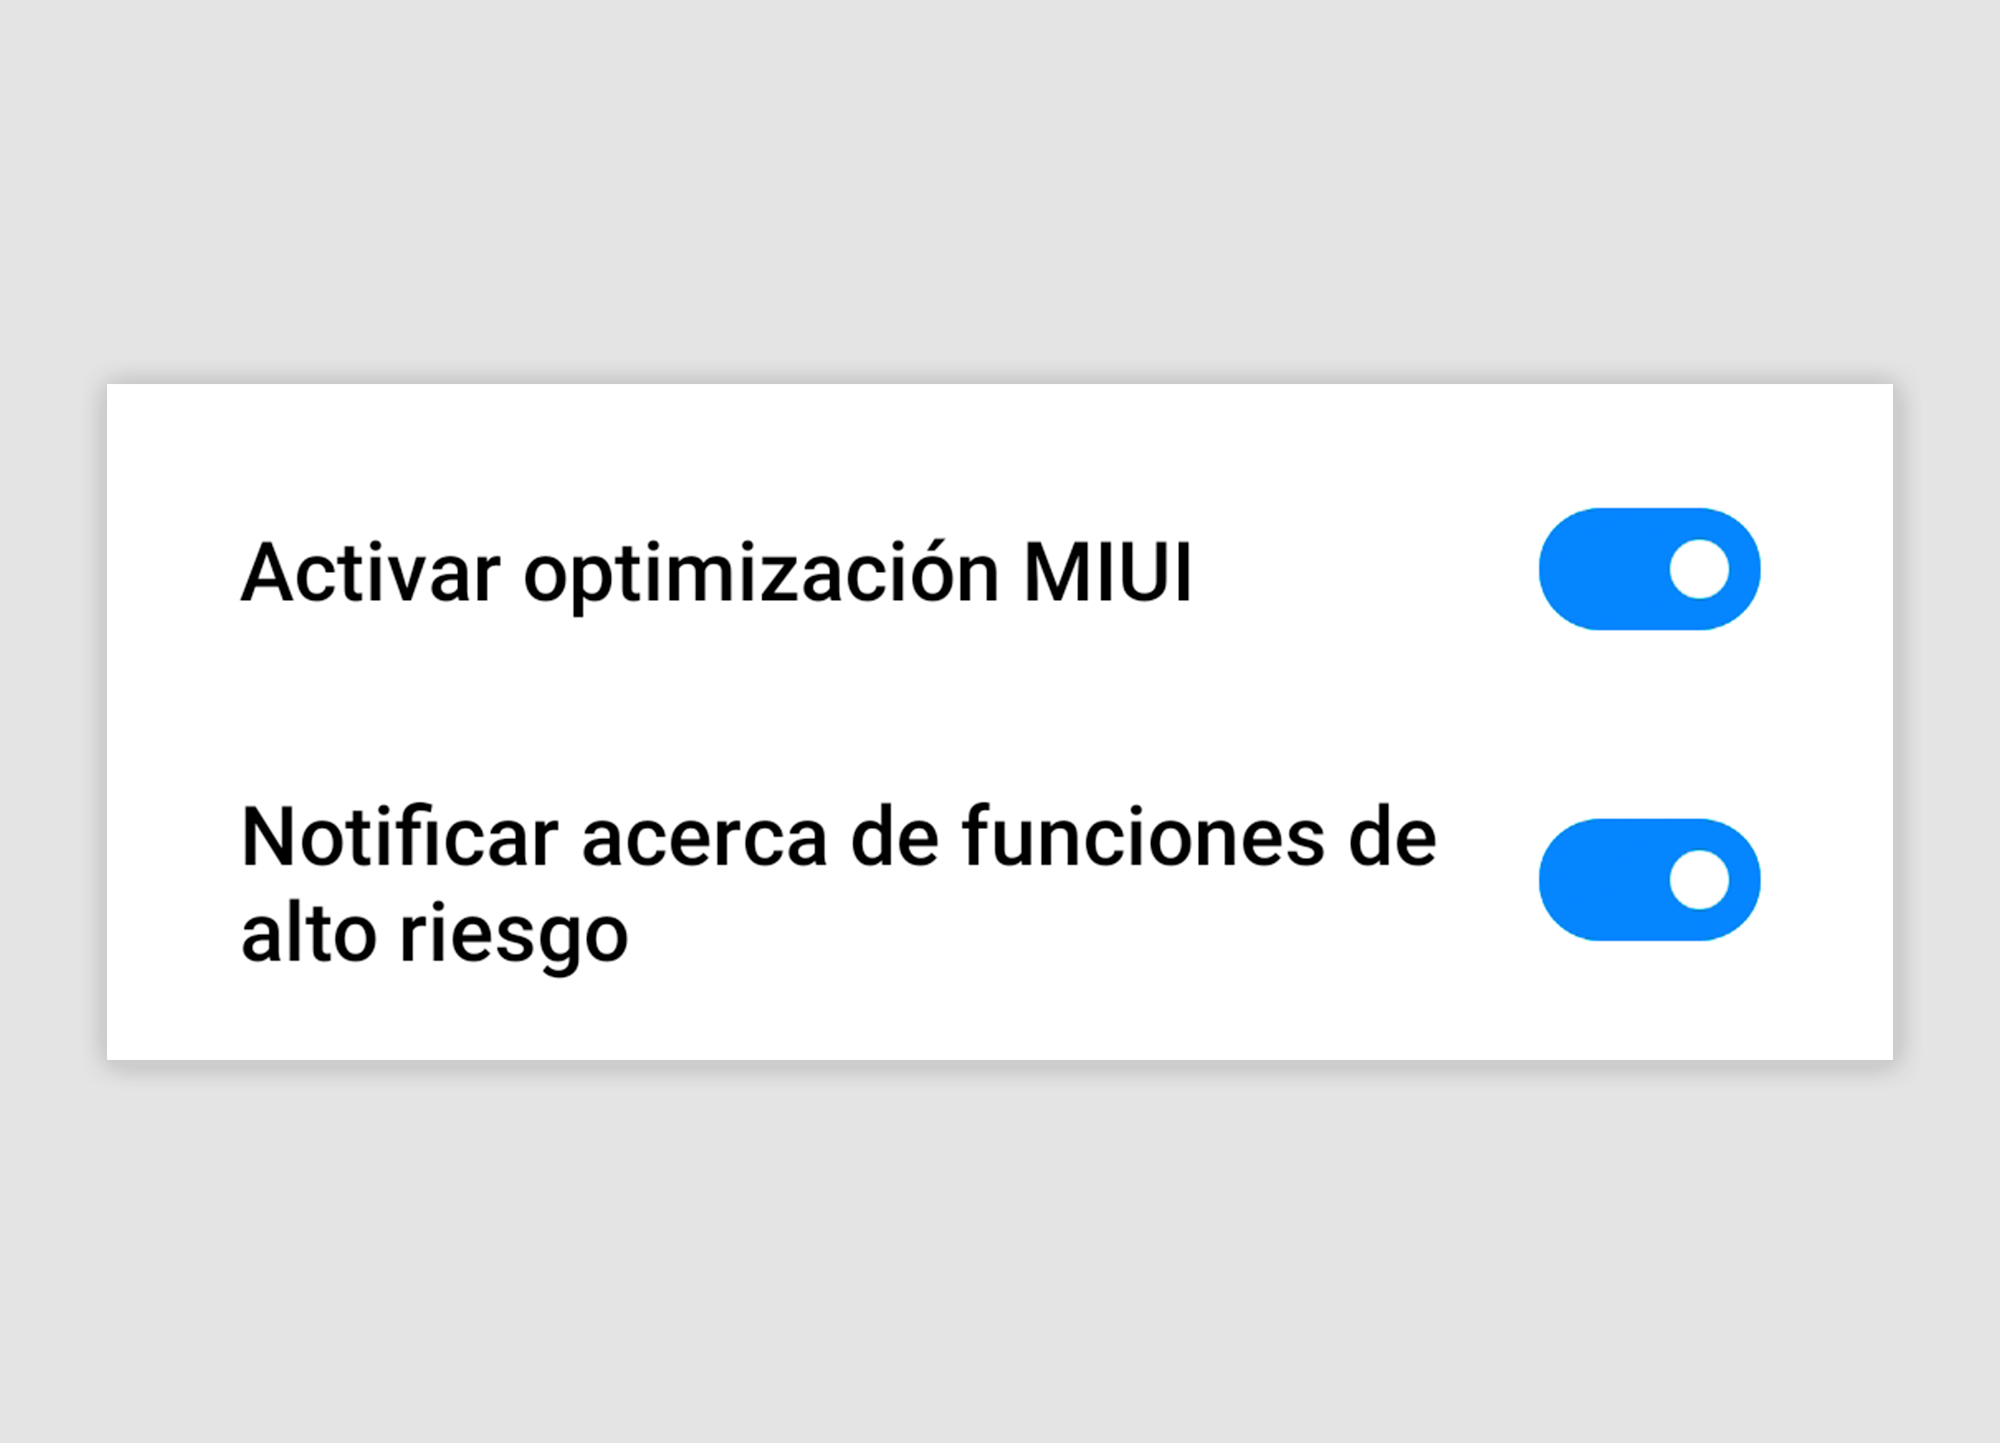 MIUI optimization, the hidden setting that improves Xiaomi